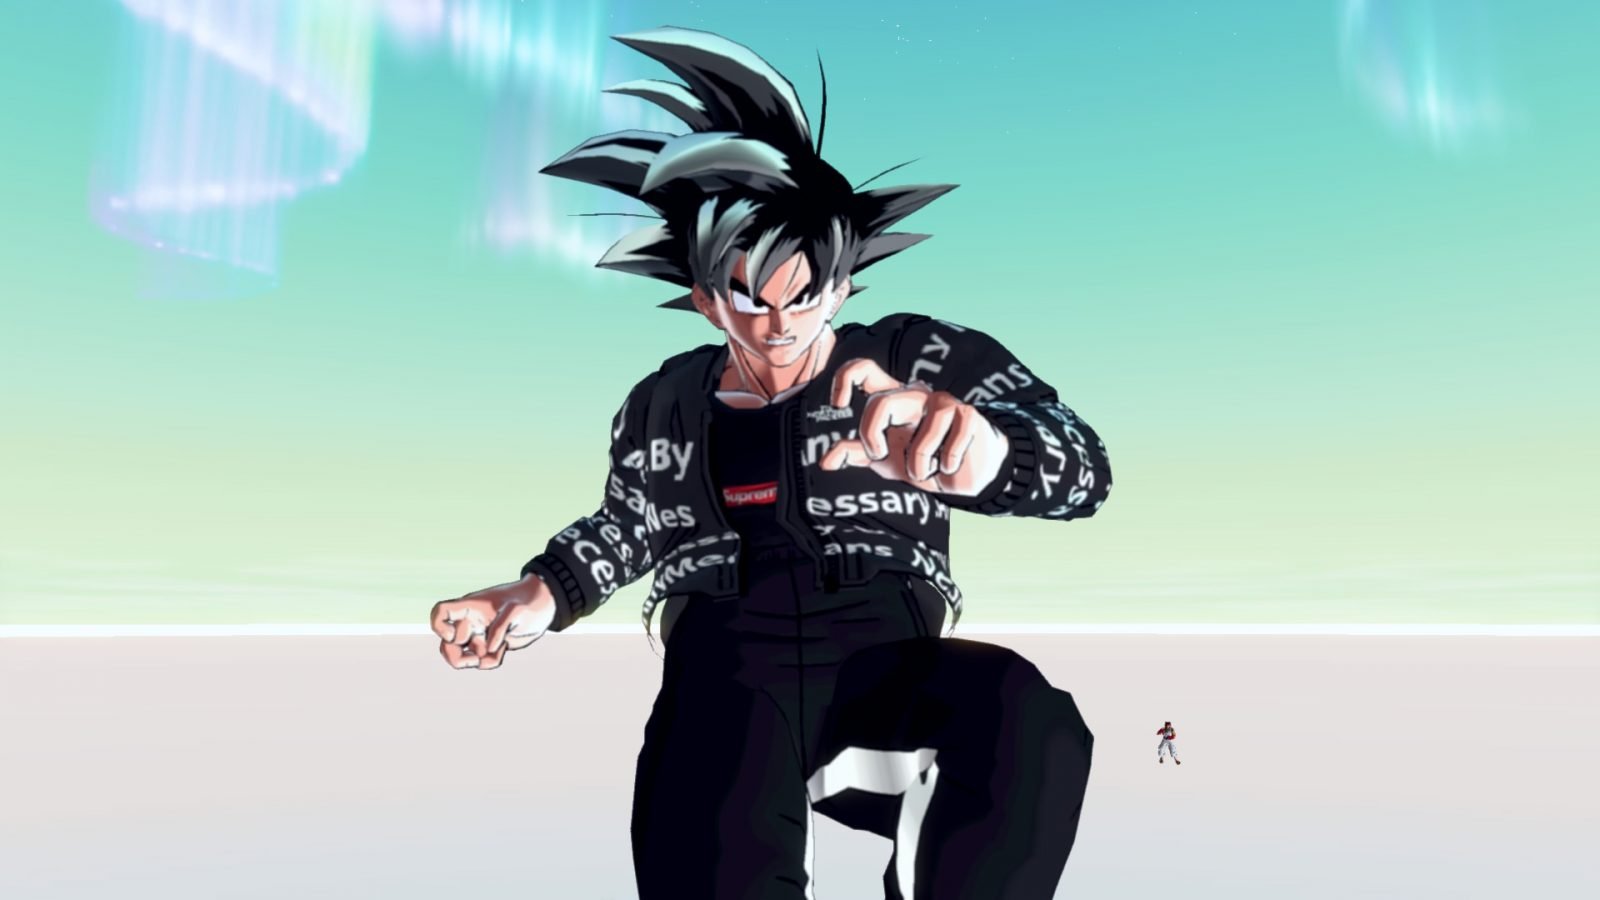 Drip Goku + HUM/SYM fit – Xenoverse Mods